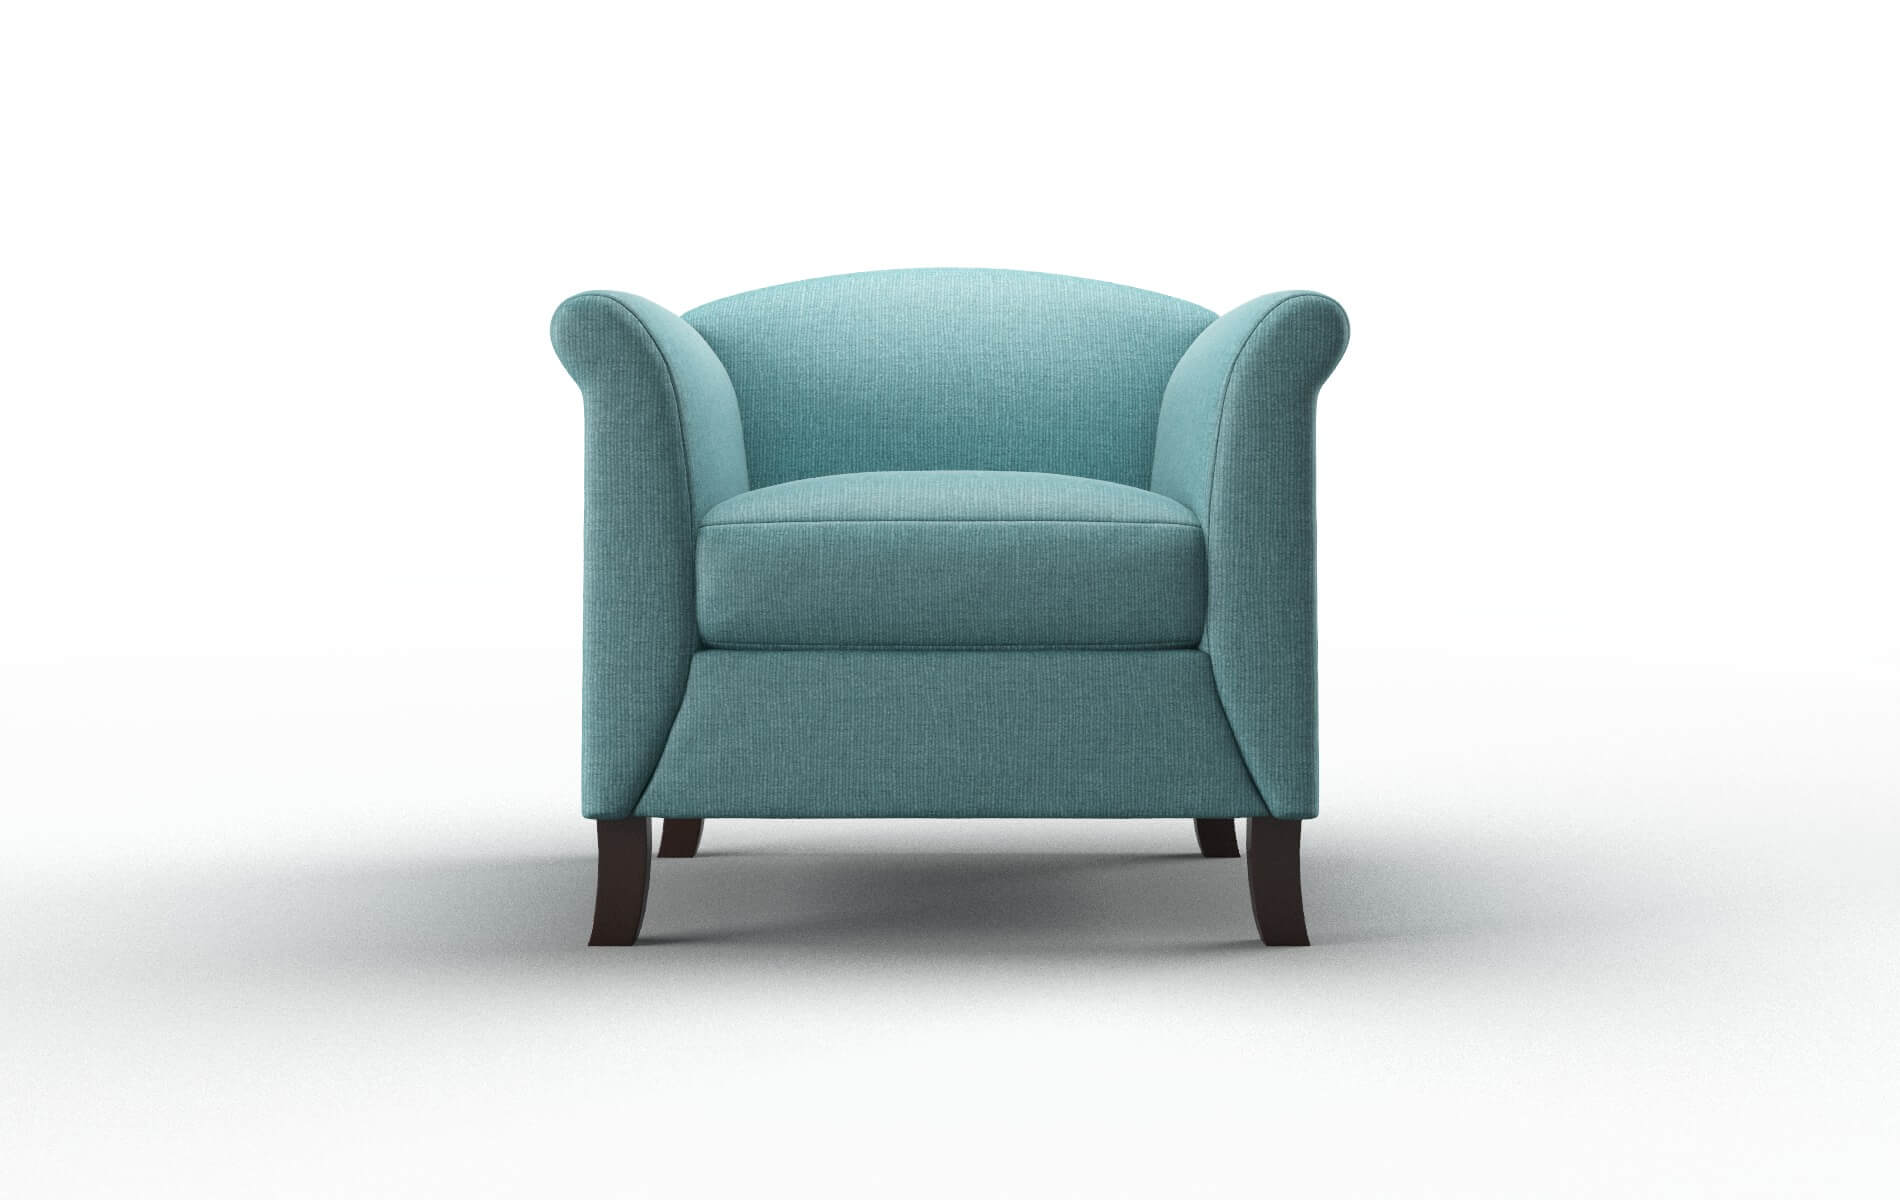 Crete Parker Turquoise chair espresso legs